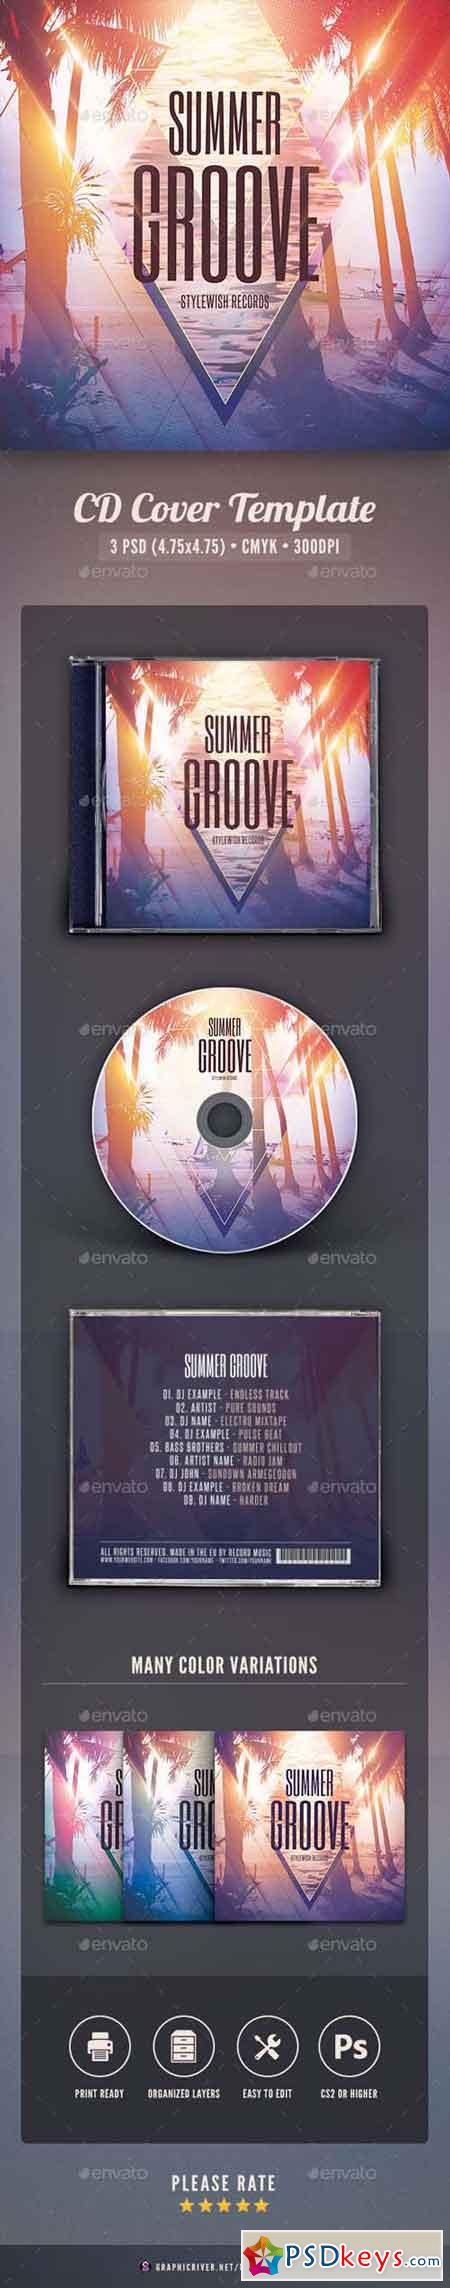 Summer Groove CD Cover Artwork 16437807